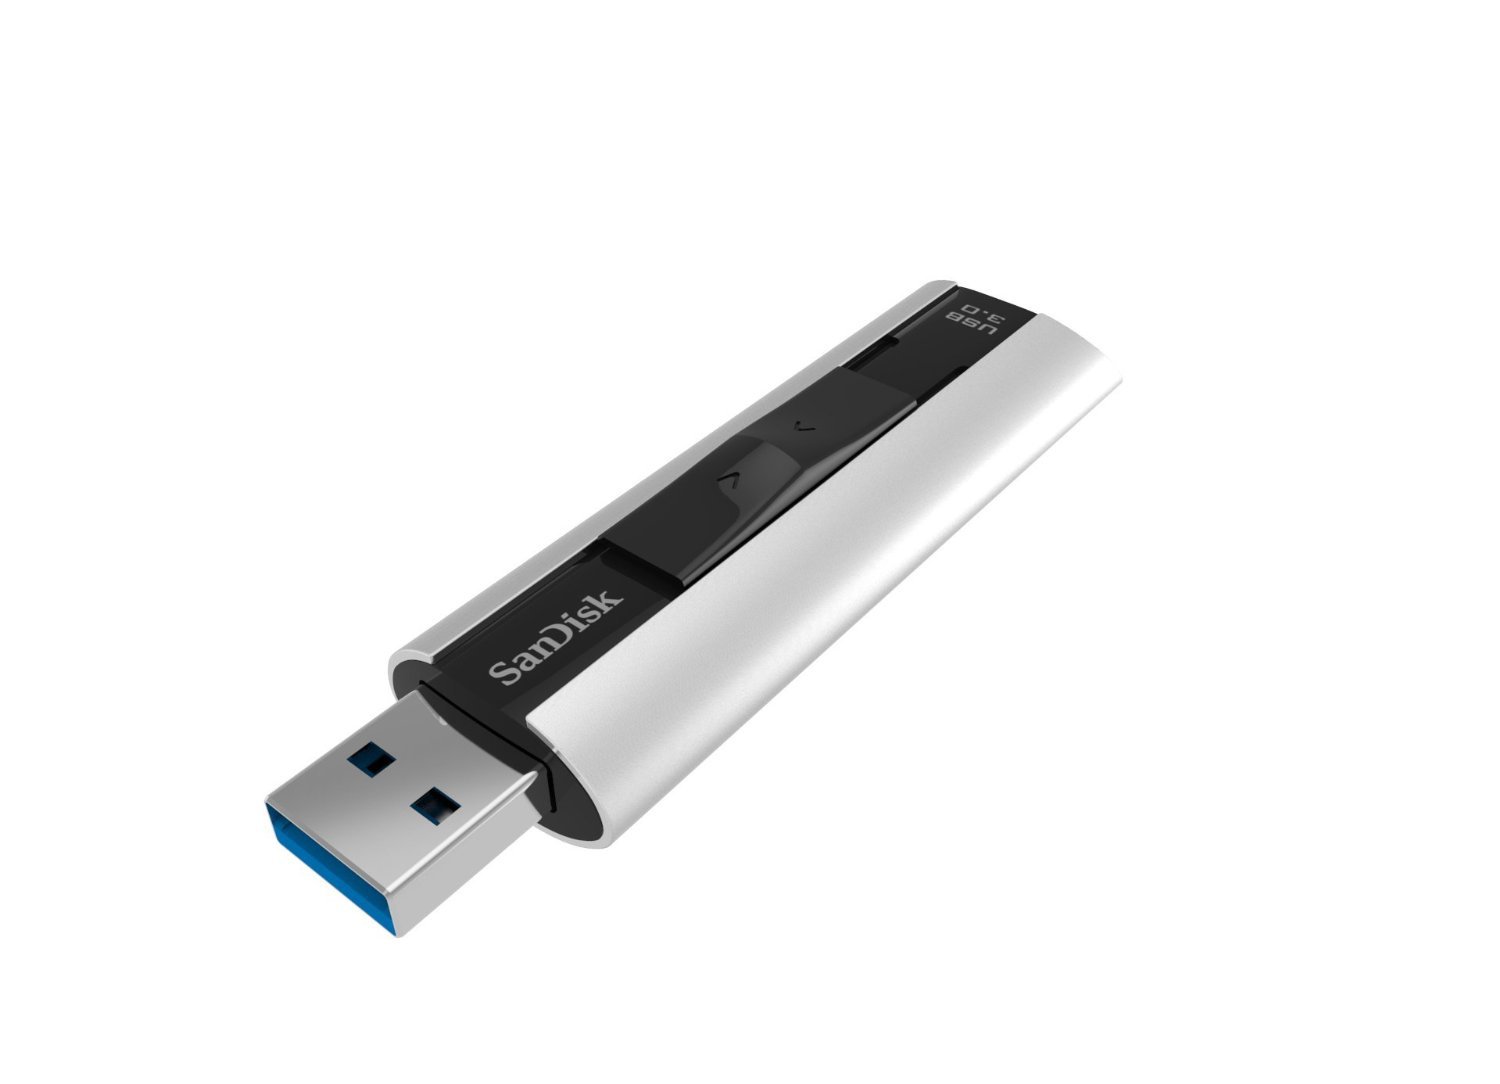 Usb 128 гб купить. SANDISK extreme Pro USB 3.1. SANDISK extreme Pro USB. SANDISK extreme Pro USB 3.1 256 GB. USB SANDISK extreme Pro 256gb.